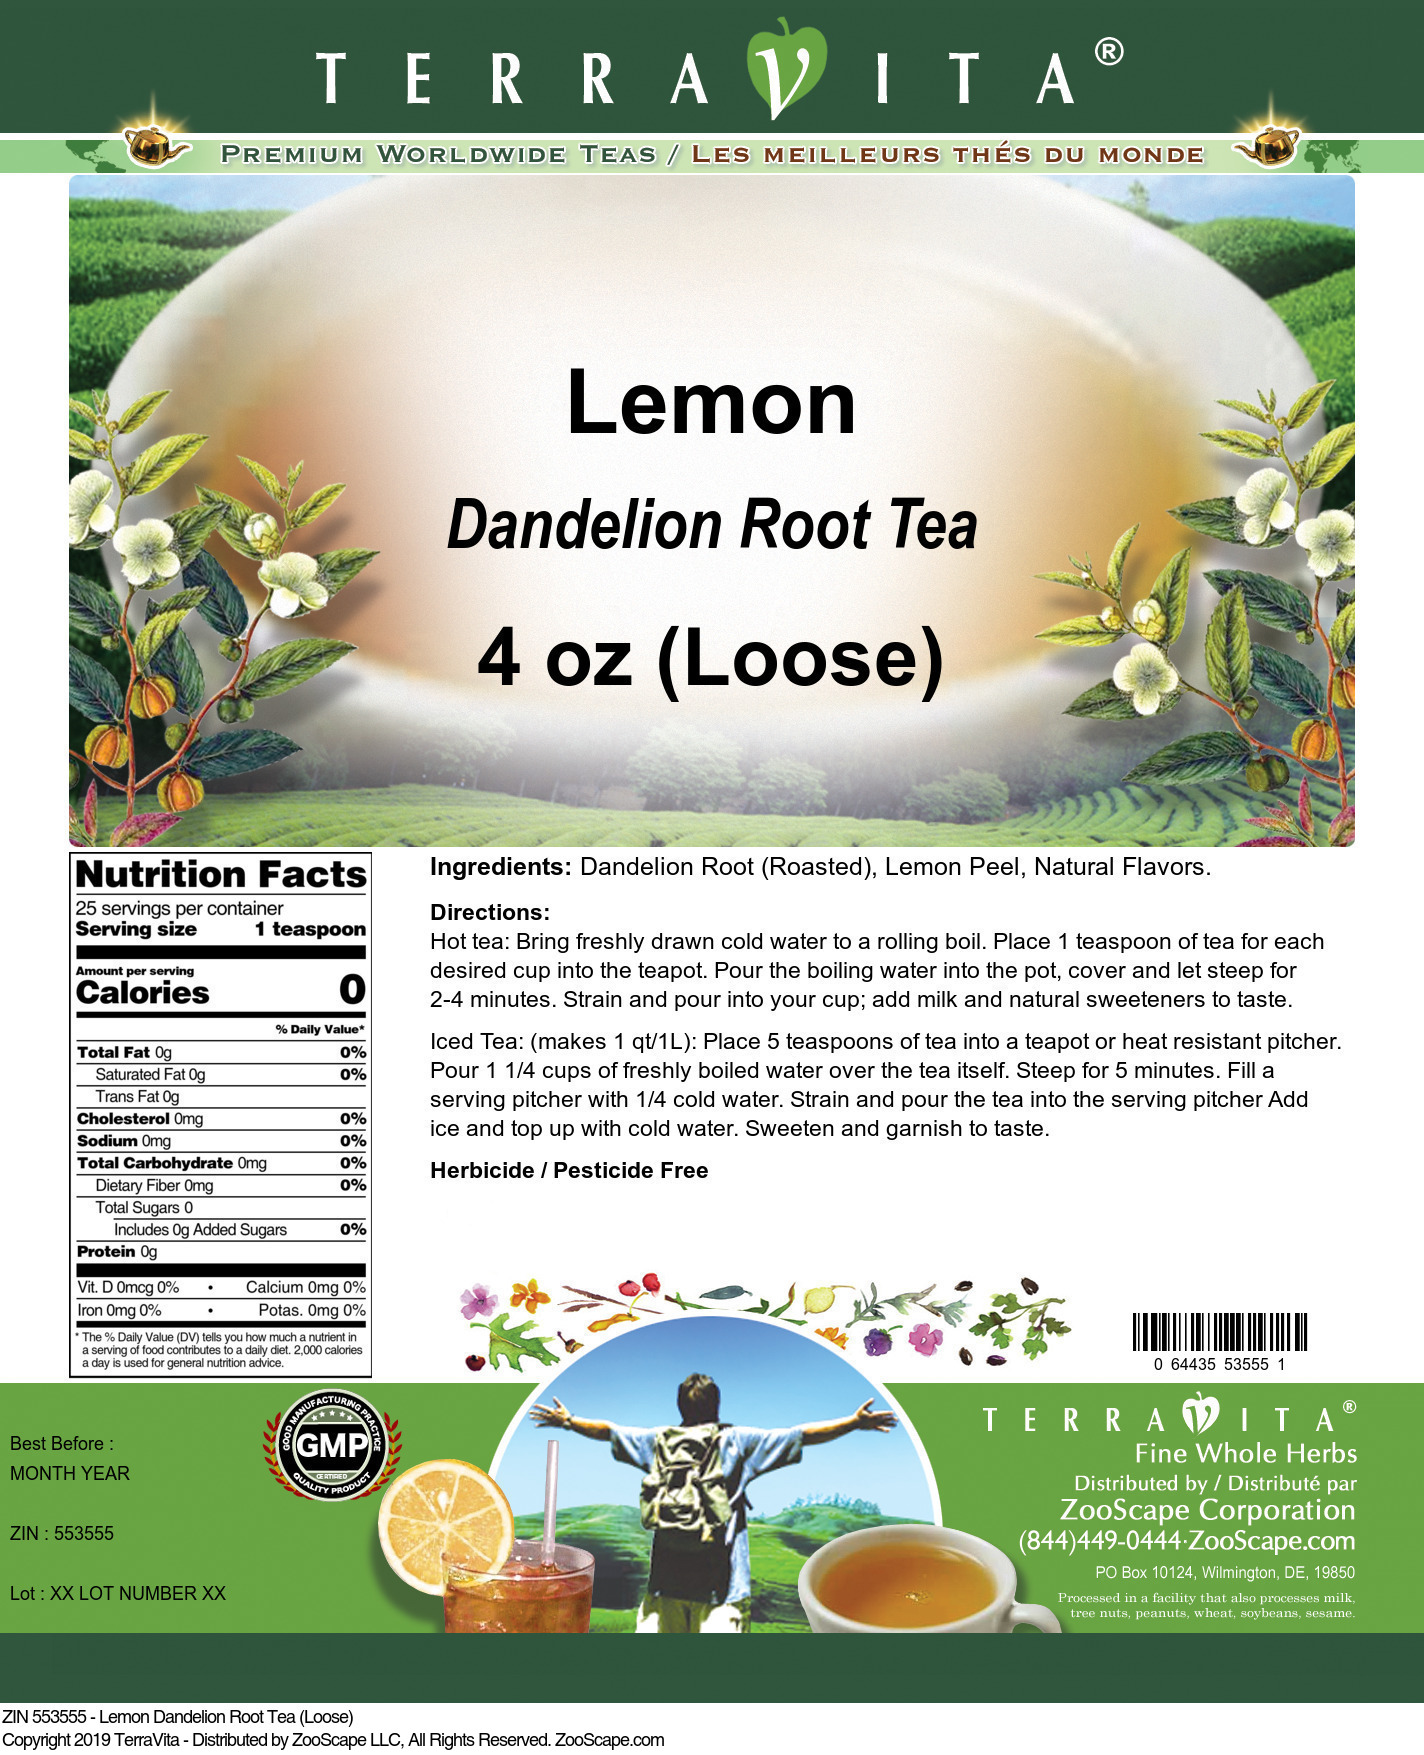 Lemon Dandelion Root Tea (Loose) - Label